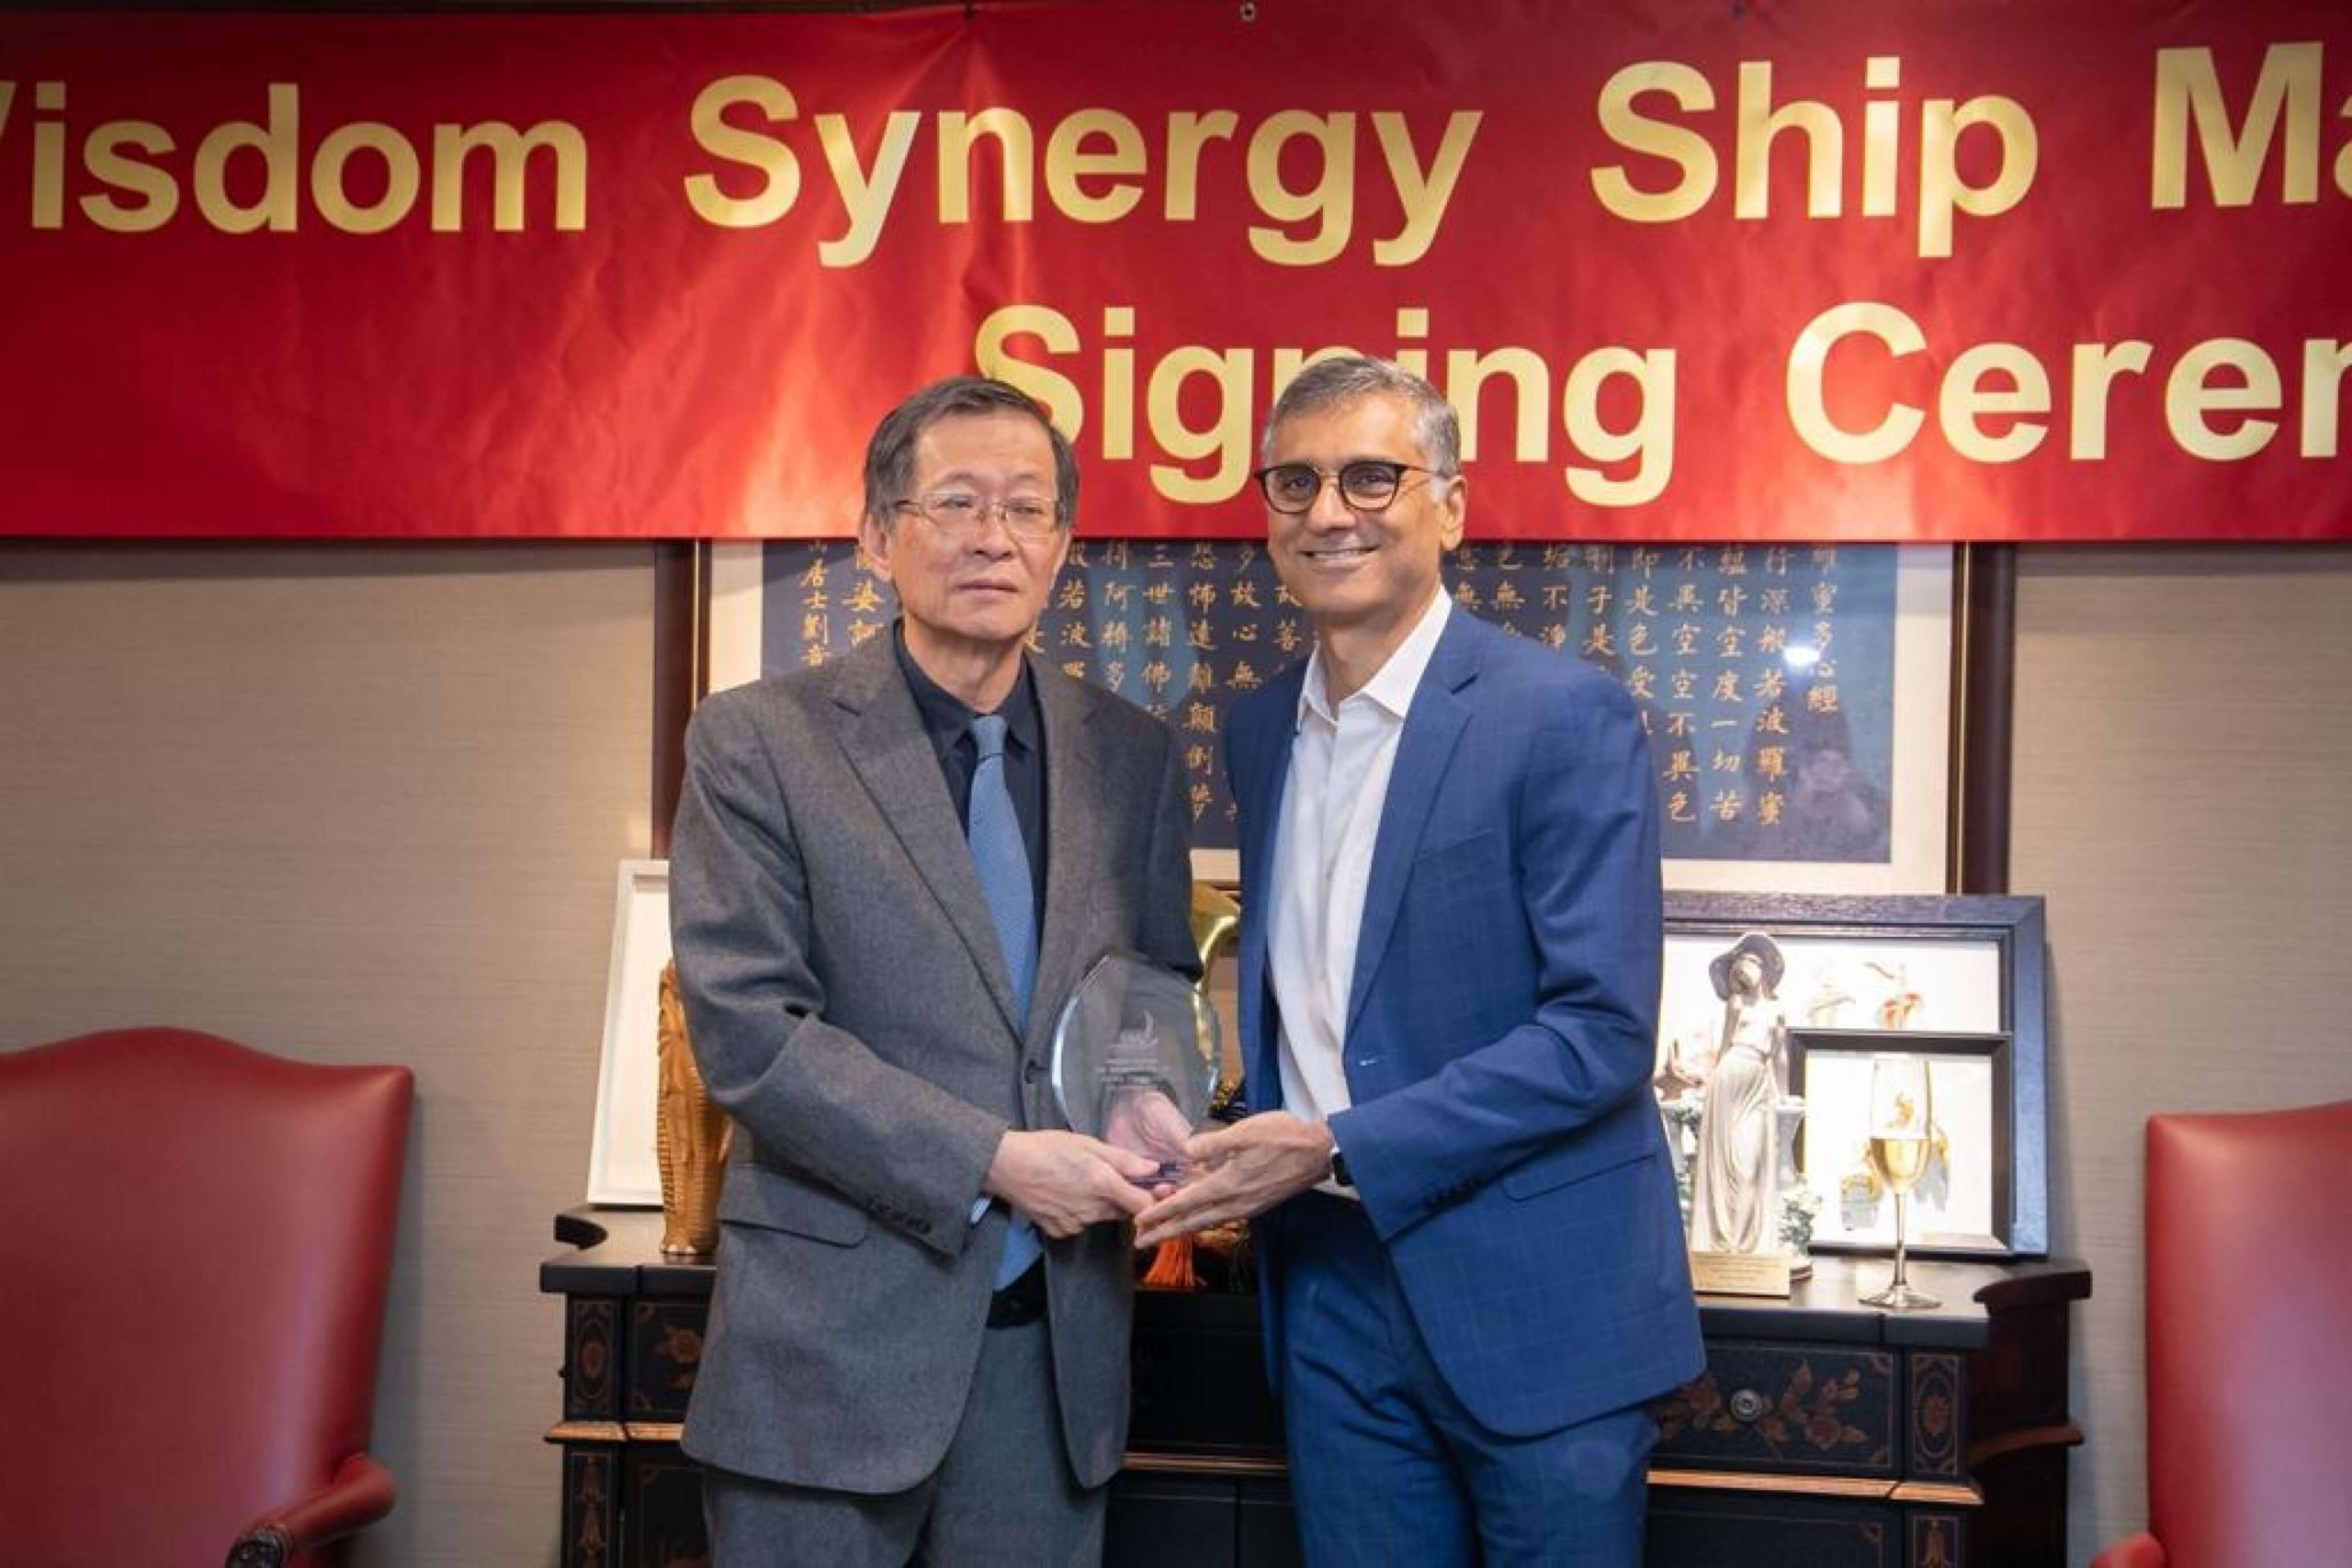 Wisdom synergy ship management signing ceremony